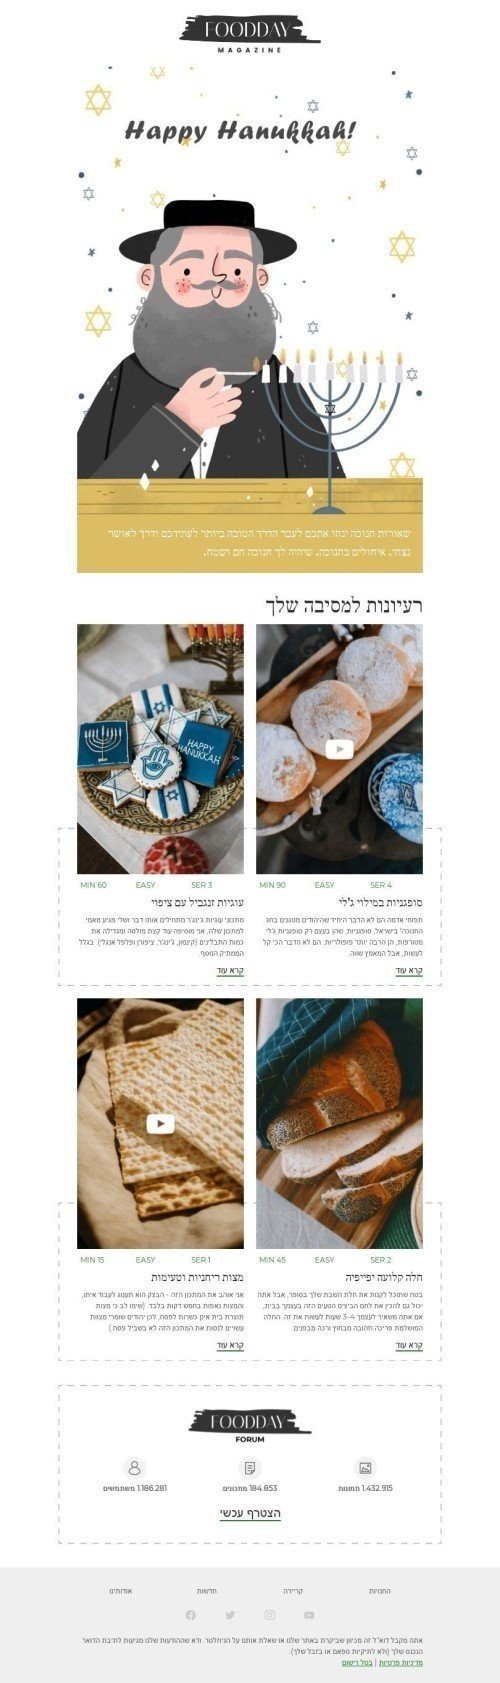 Hanukkah Email Template «Hanukkah sameach» for Food industry desktop view